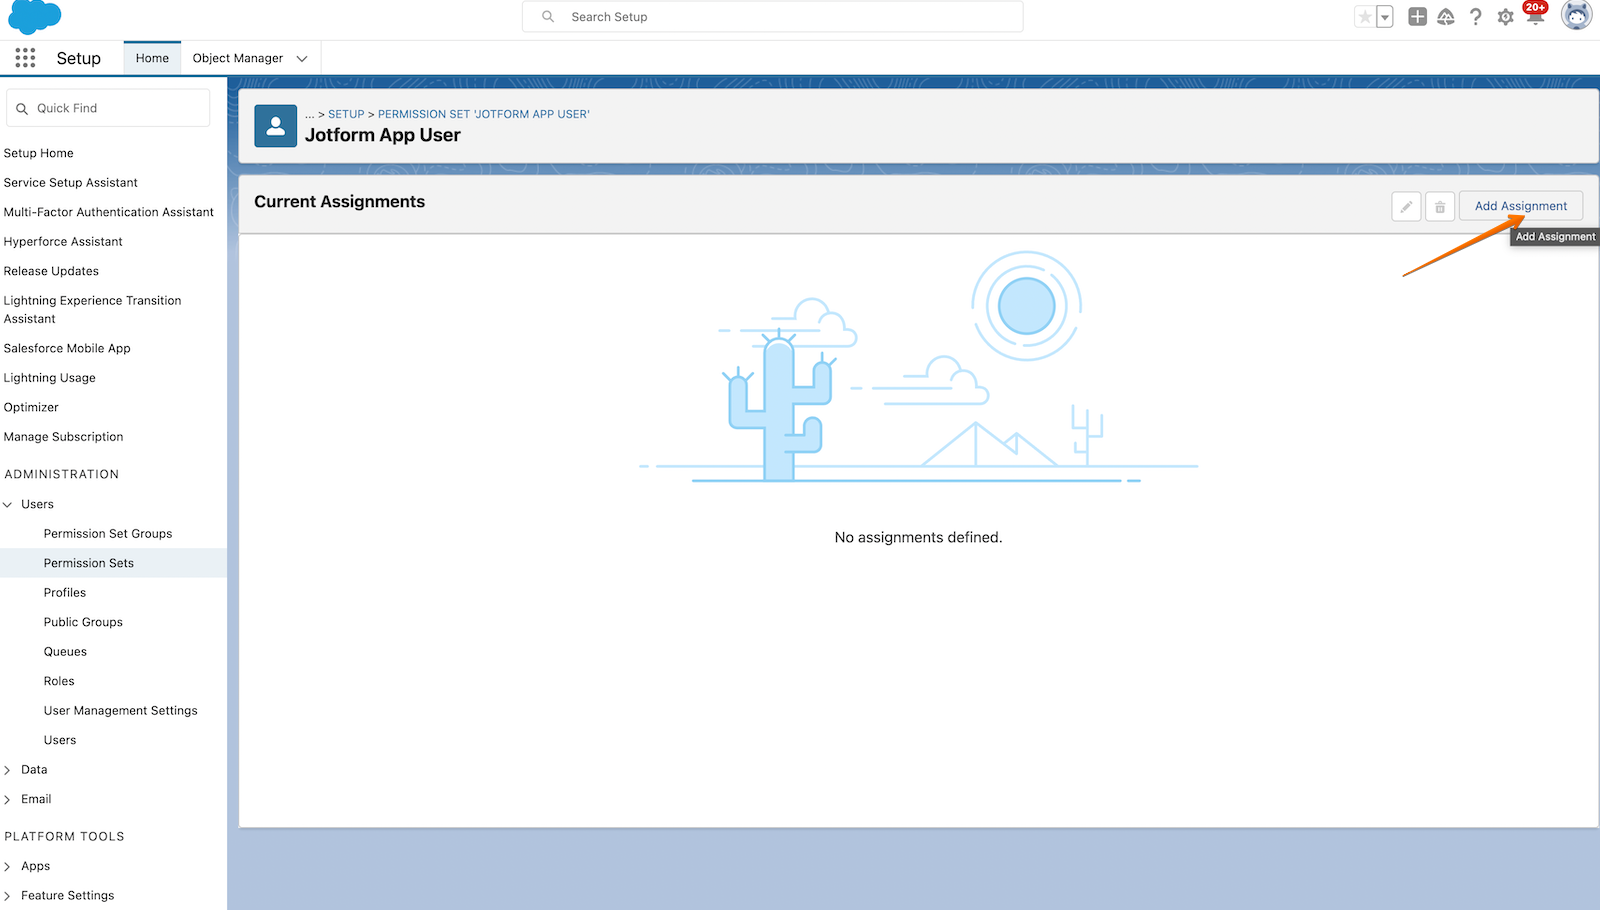 Salesforce integration   Professional Edition Image 5 Screenshot 214 Screenshot 54 Screenshot 54